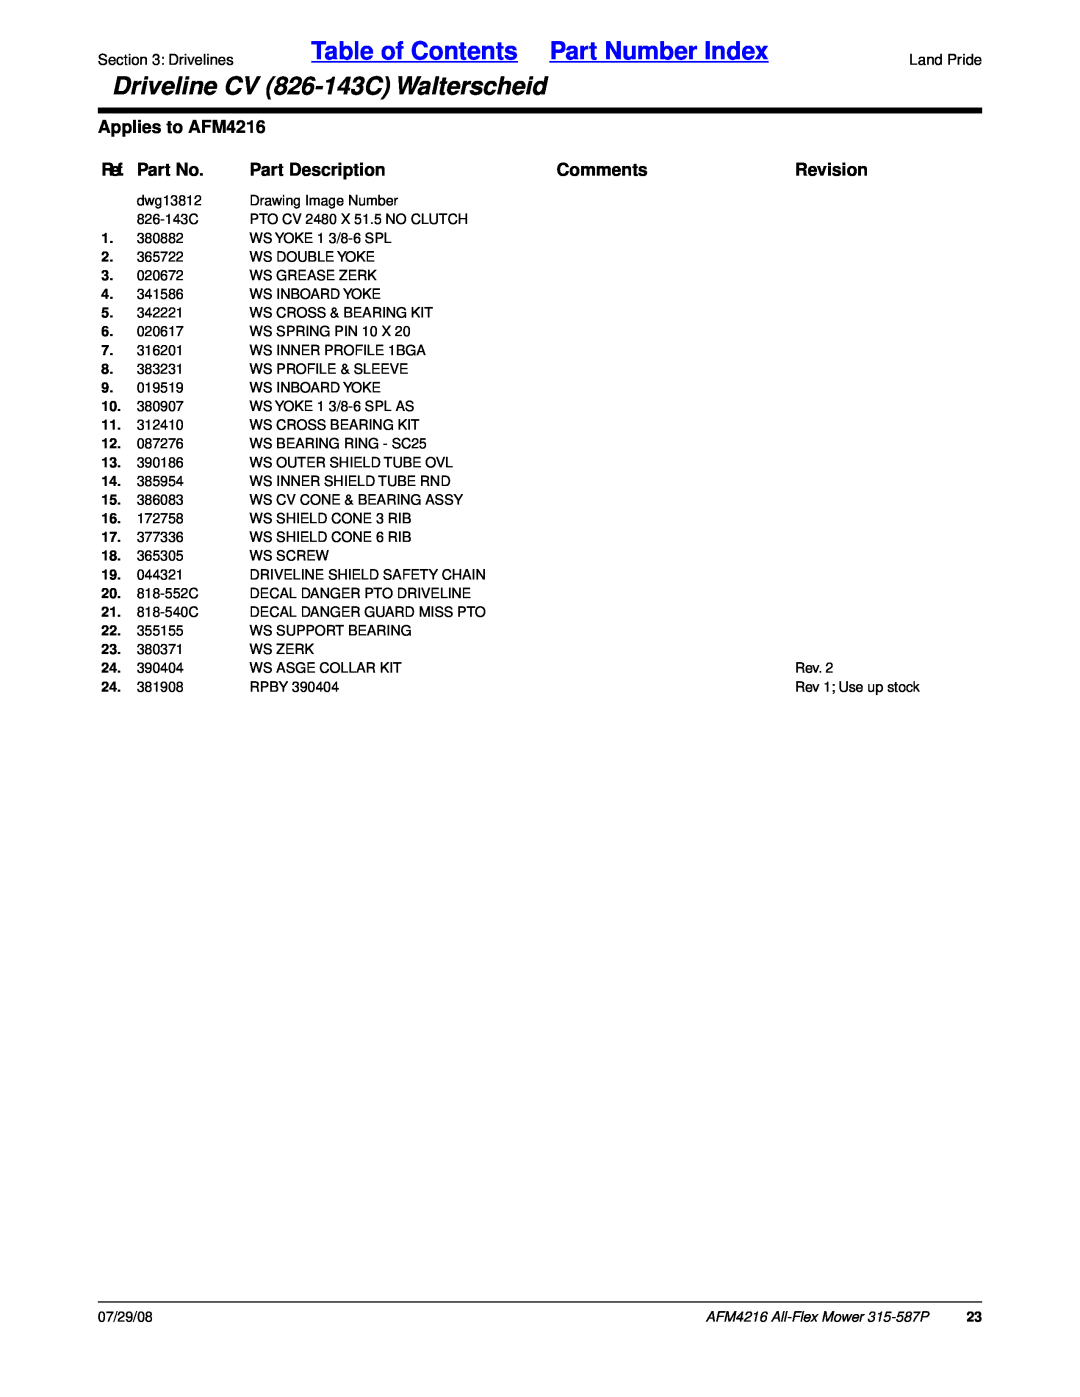 Land Pride Table of Contents Part Number Index, Driveline CV 826-143CWalterscheid, Applies to AFM4216, Ref. Part No 